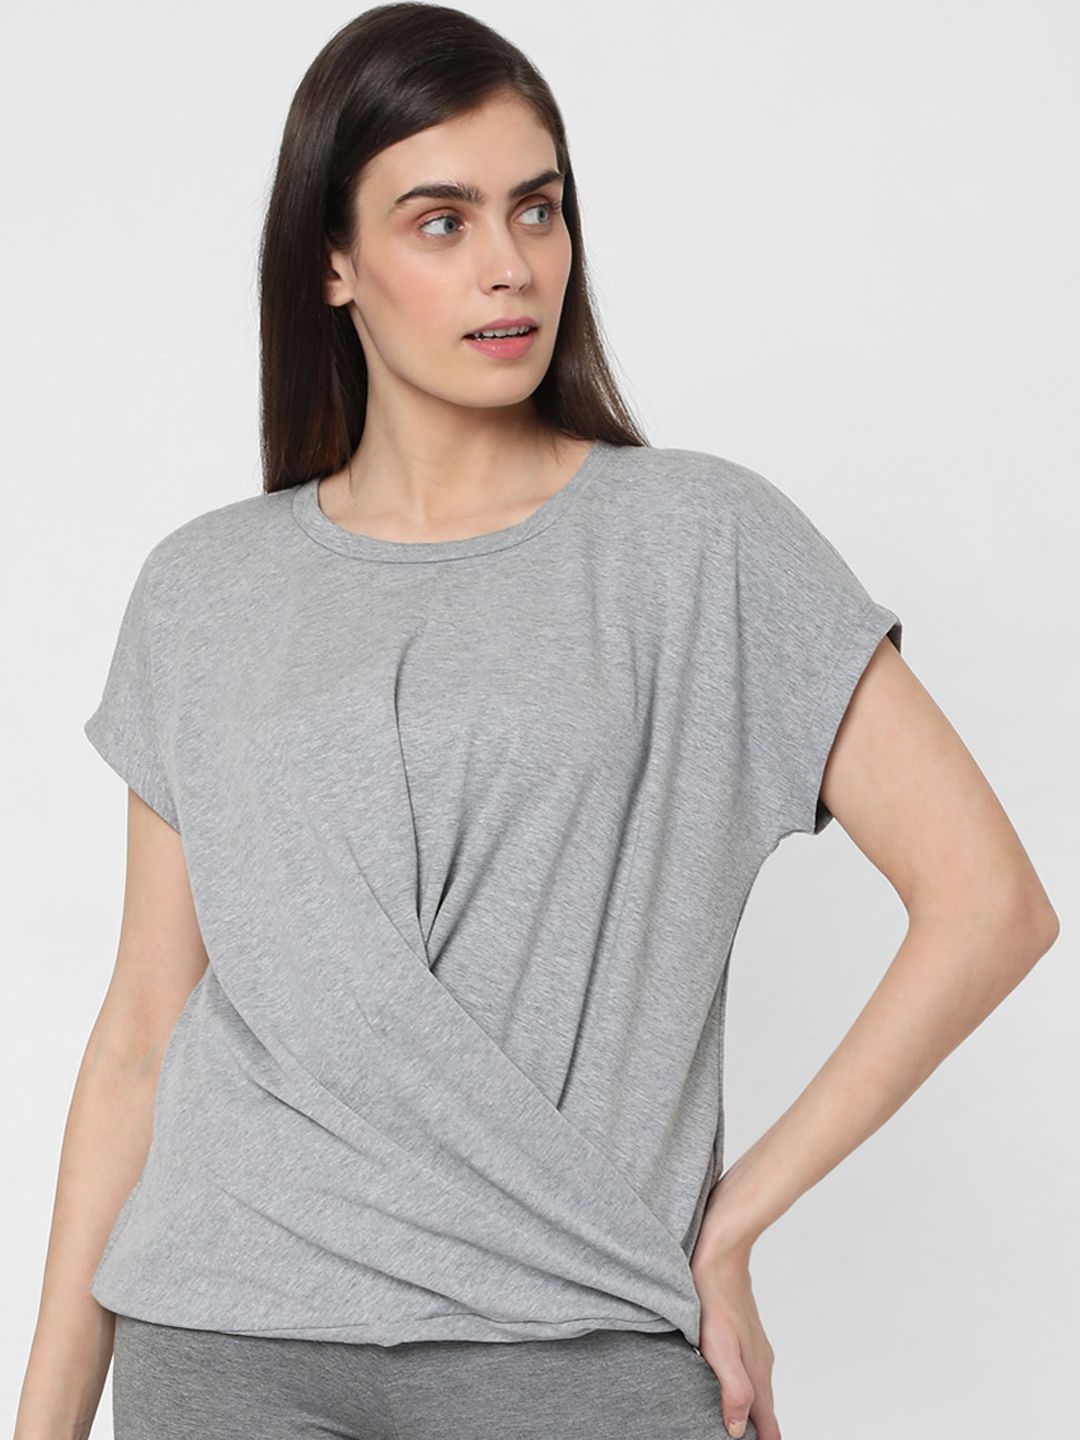 Vero Moda Women Grey Solid Lounge T-Shirt Price in India